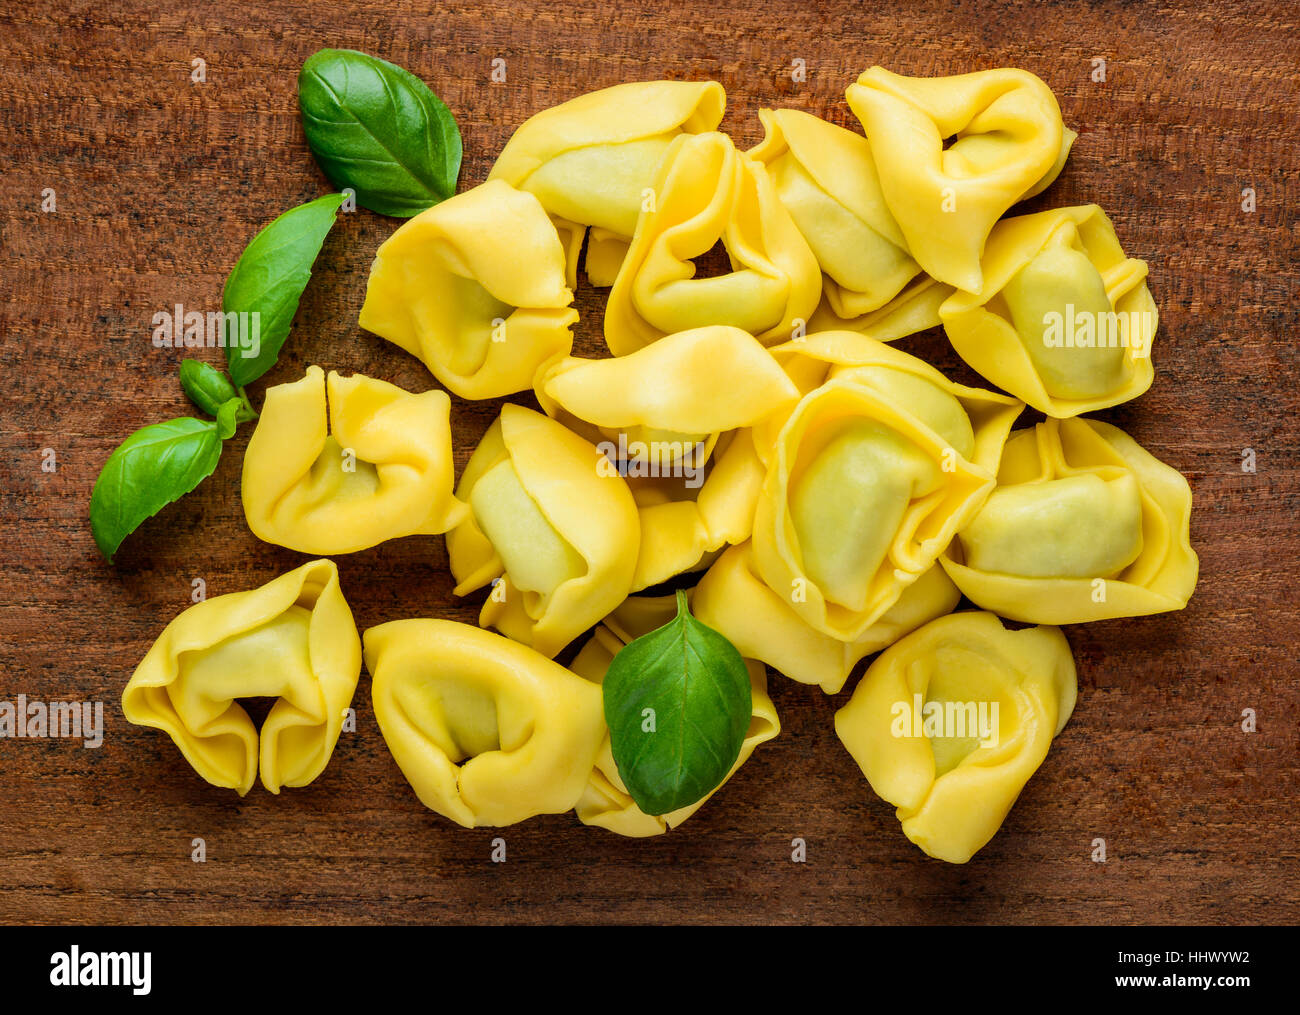 Yellow Tortelini Pasta with green Basil leaves Stock Photo